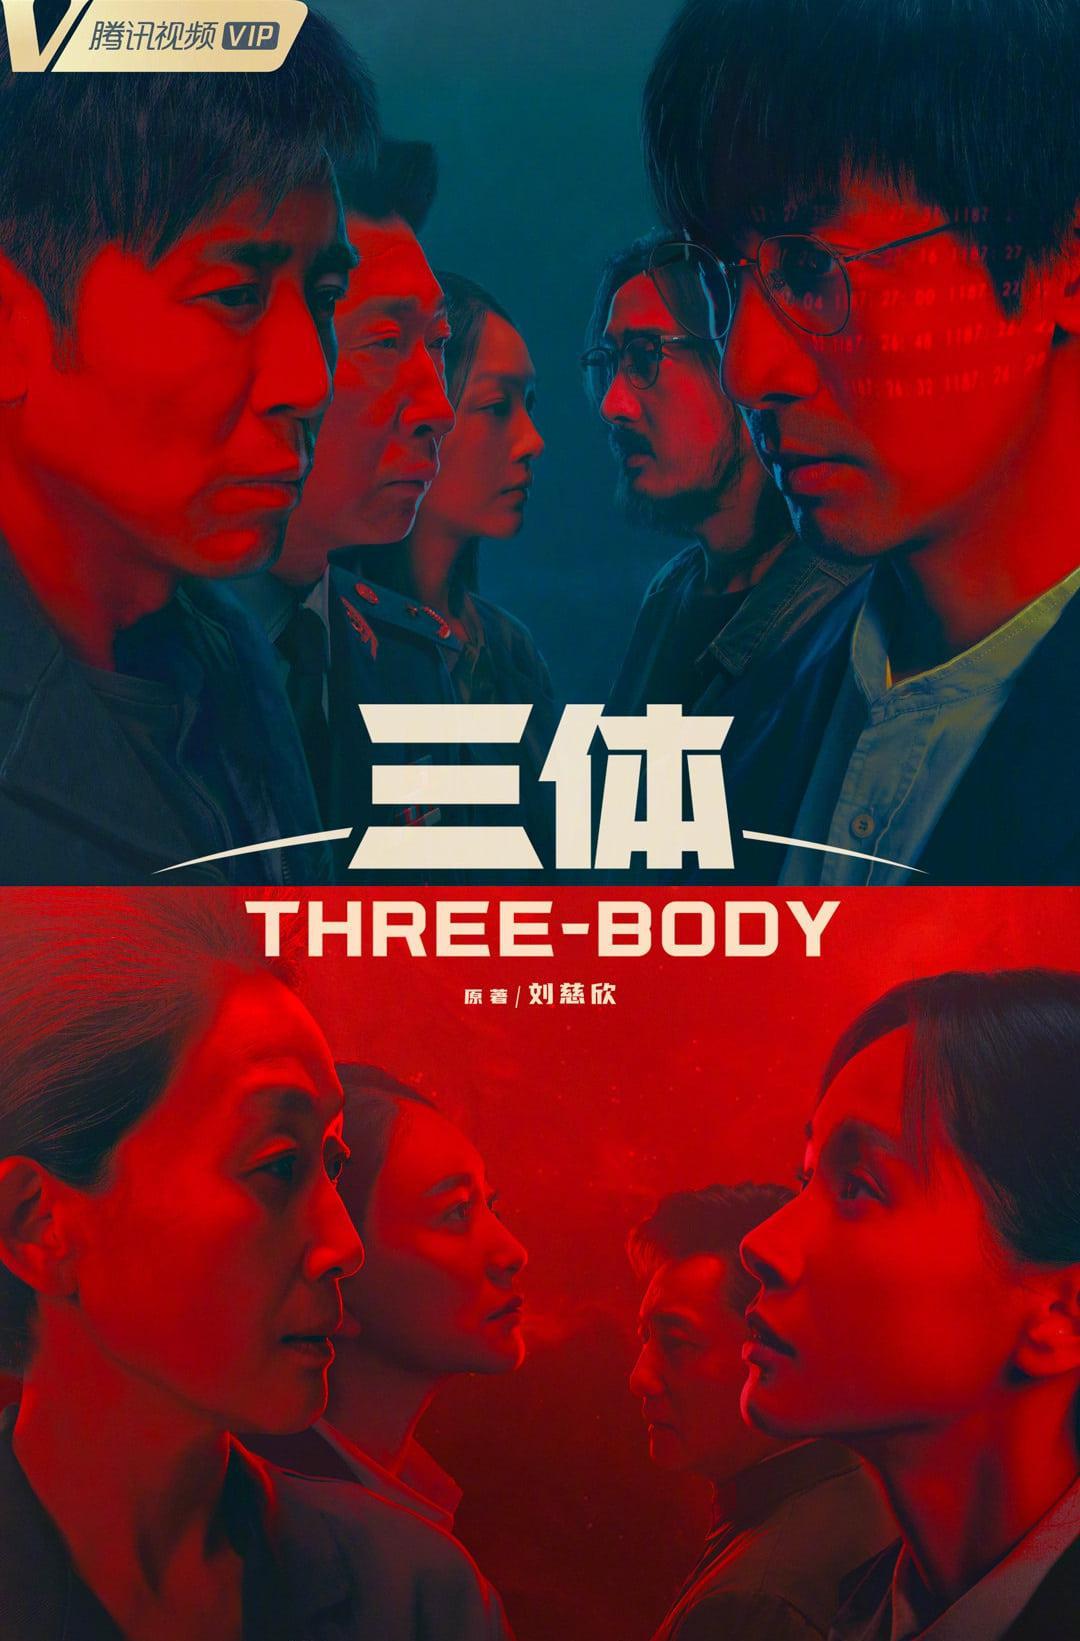 TV ratings for Three-Body (三体) in Dinamarca. Tencent Video TV series